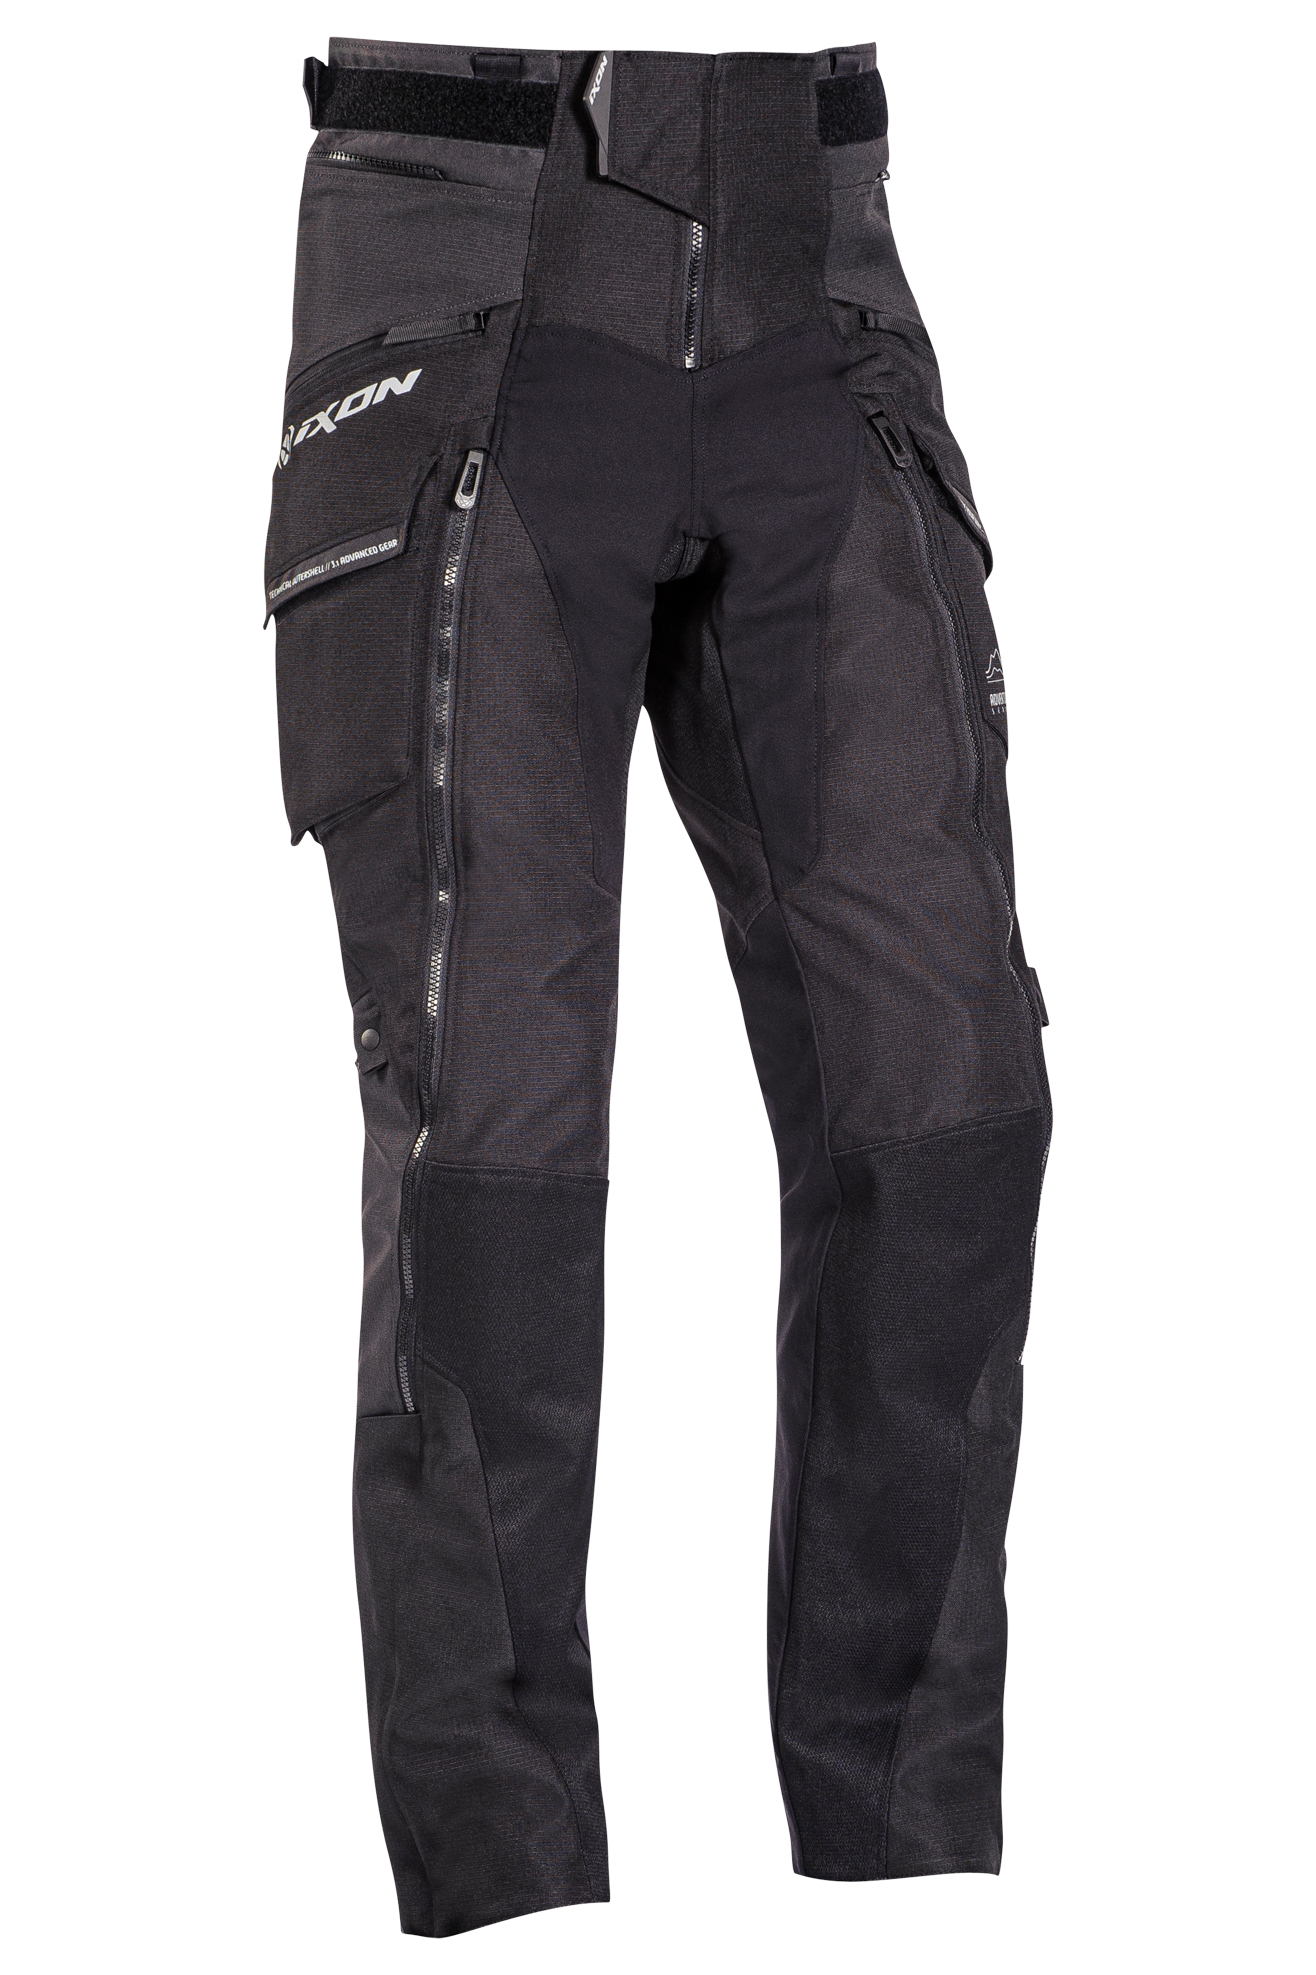 Ixon Pantalones de Moto  Ragnar Negro-Antracita